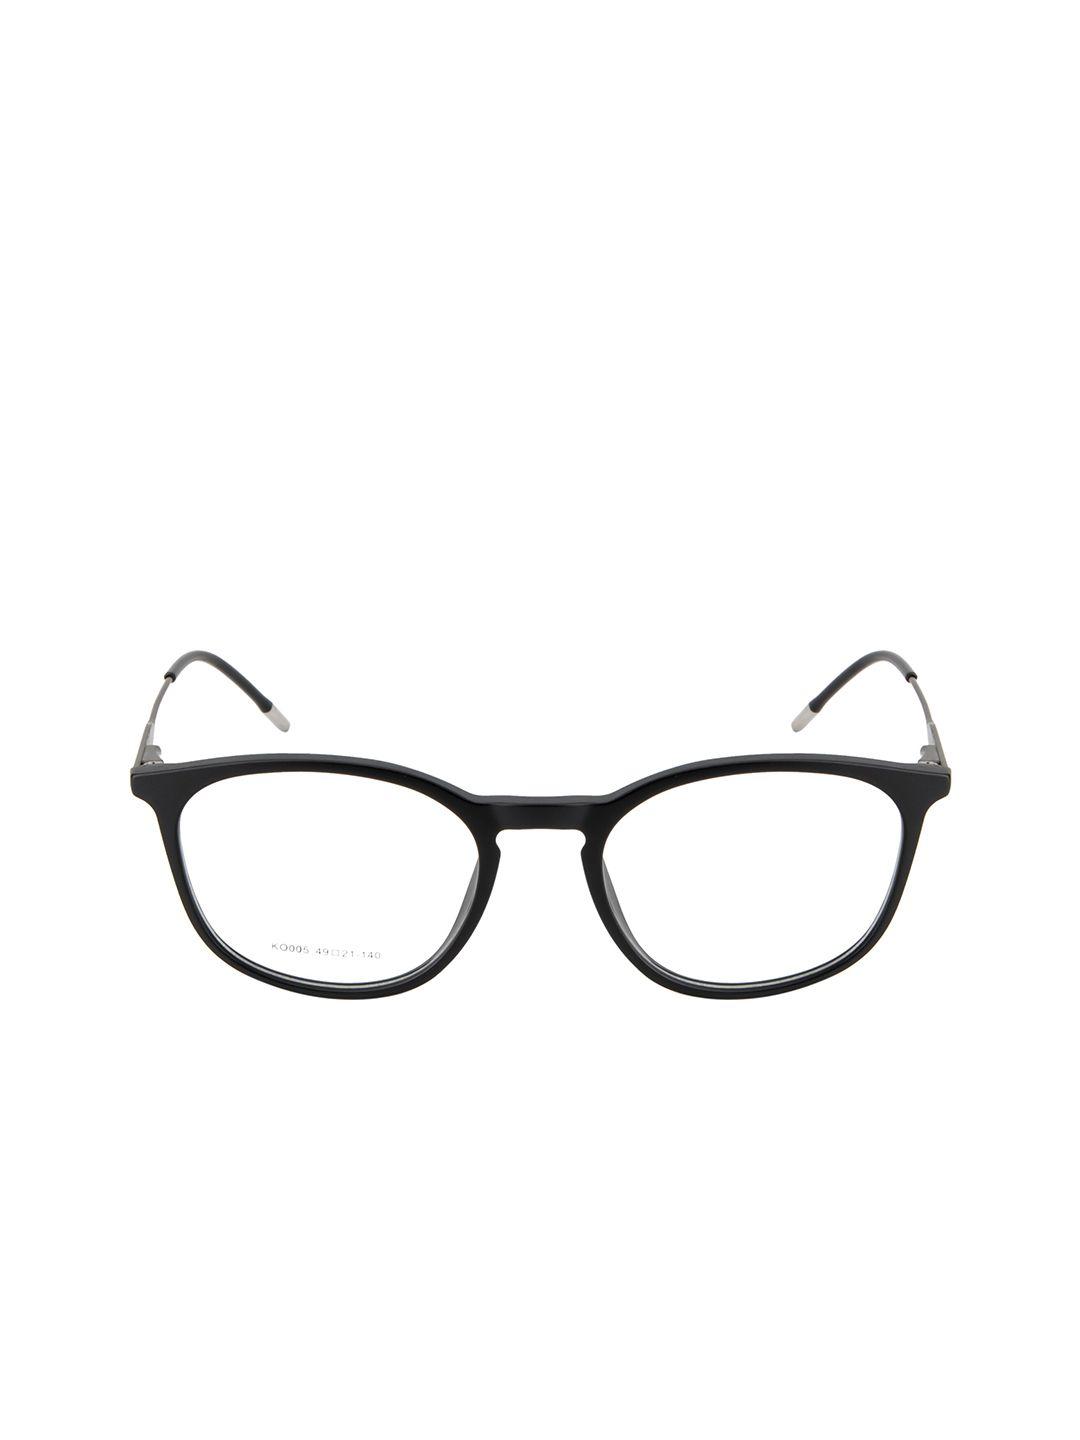 ted smith unisex black solid full rim oval frames eyeglasses